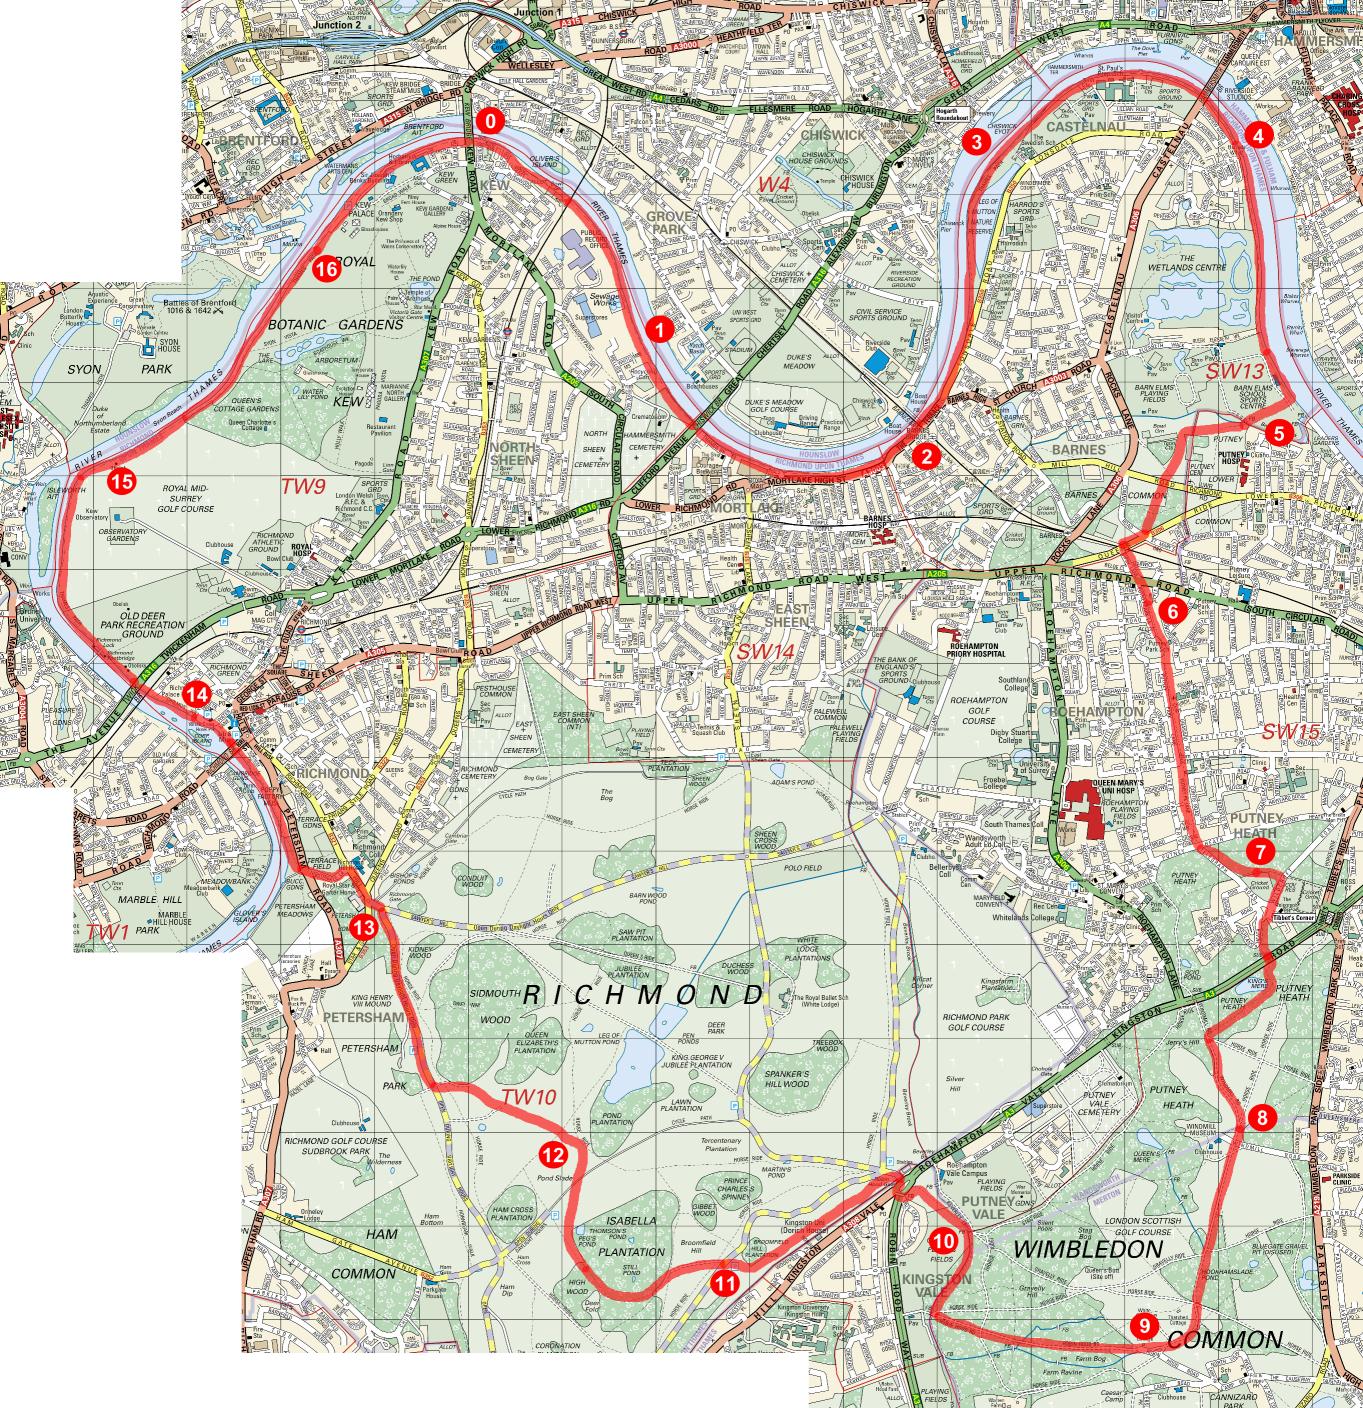 Kew, Richmon and Barnes Loop route map